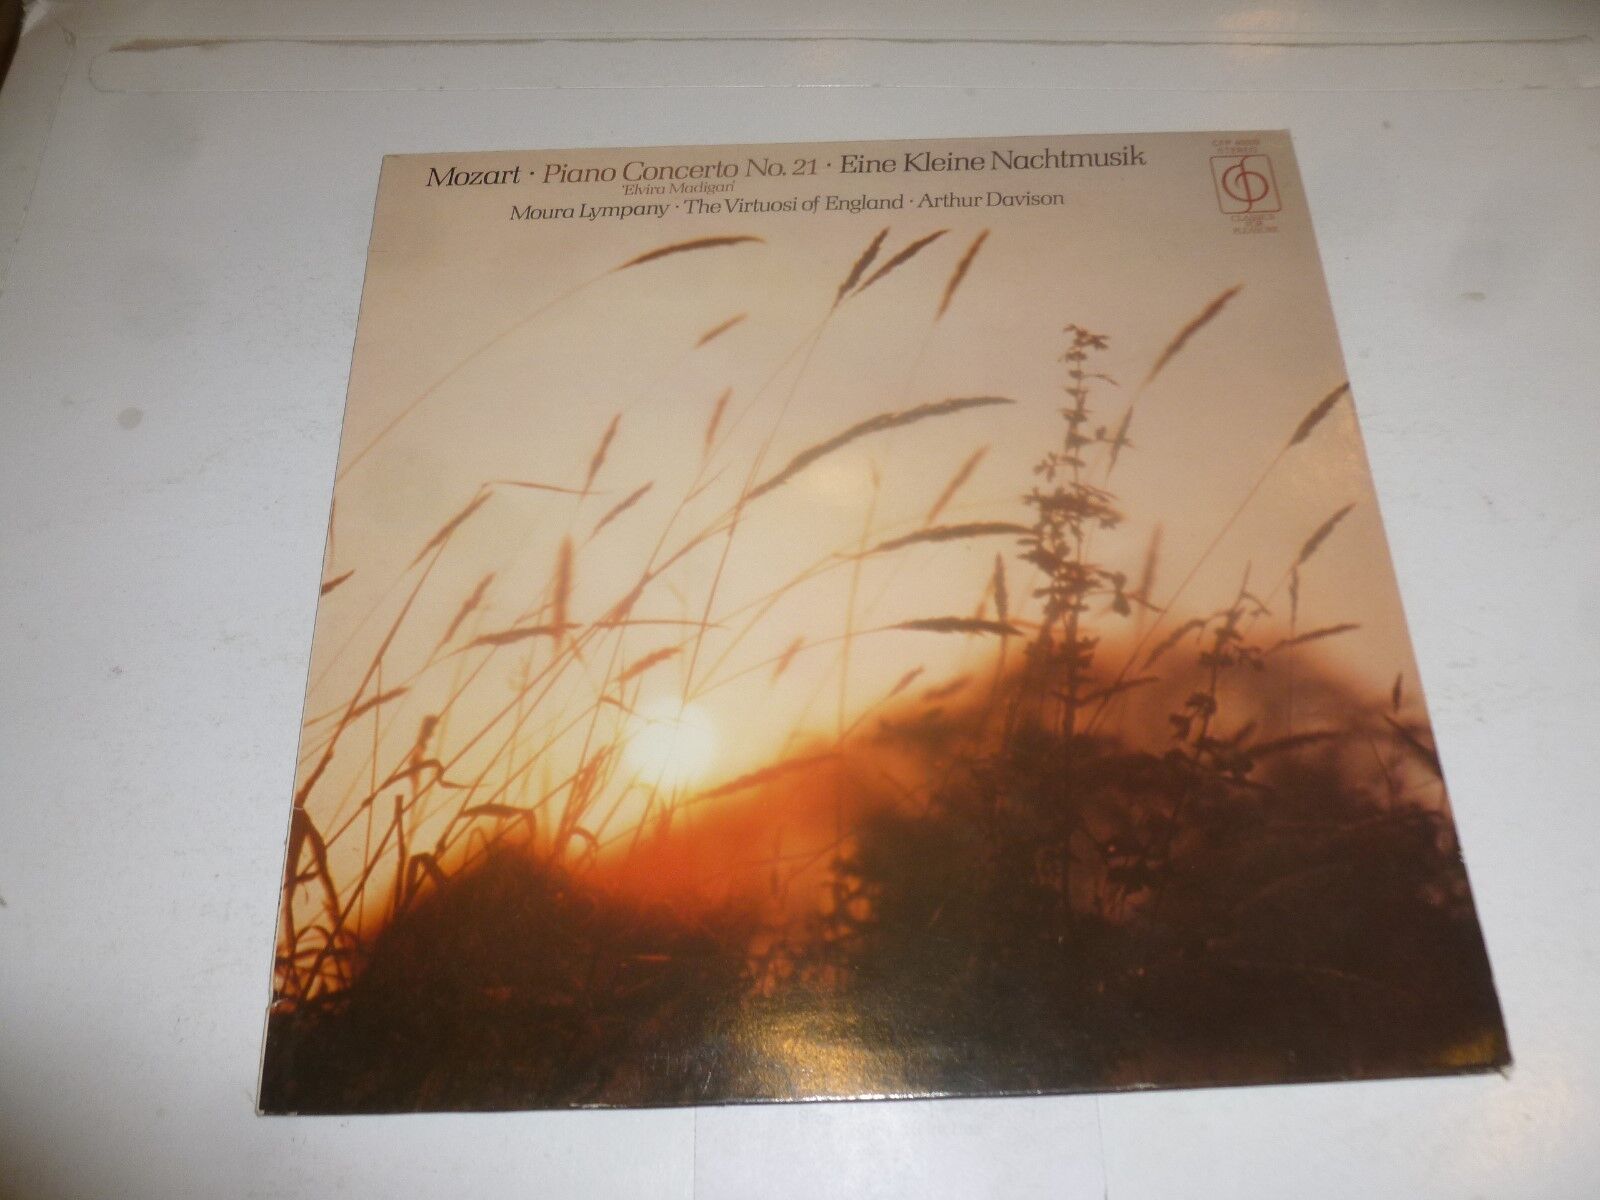 THE VIRTUOSI OF ENGLAND conducted by ARTHUR DAVISON - Mozart - 1974 UK Vinyl LP